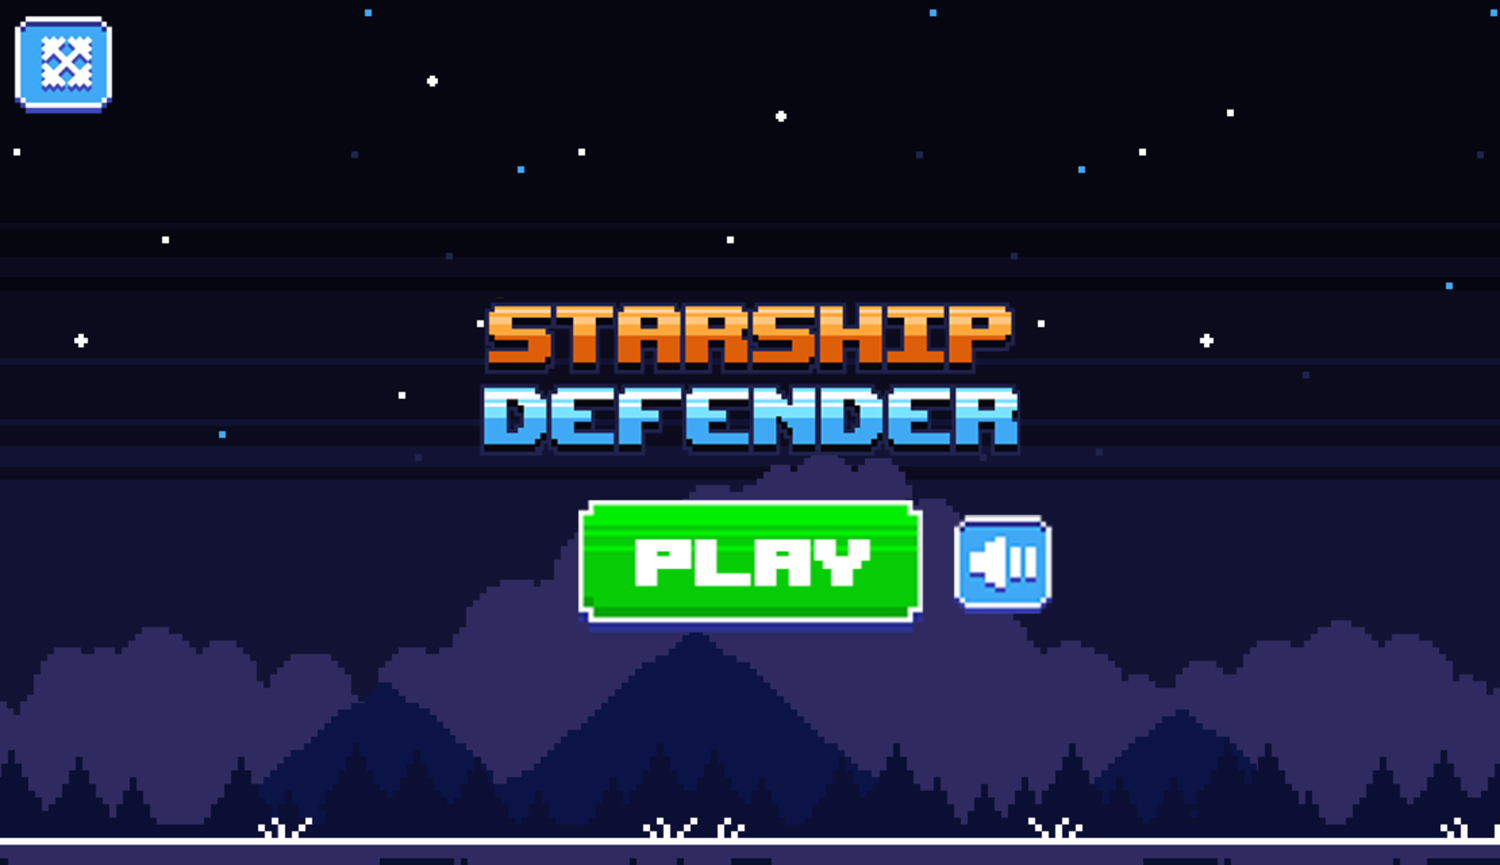 Starship Defender Game Welcome Screen Screenshot.